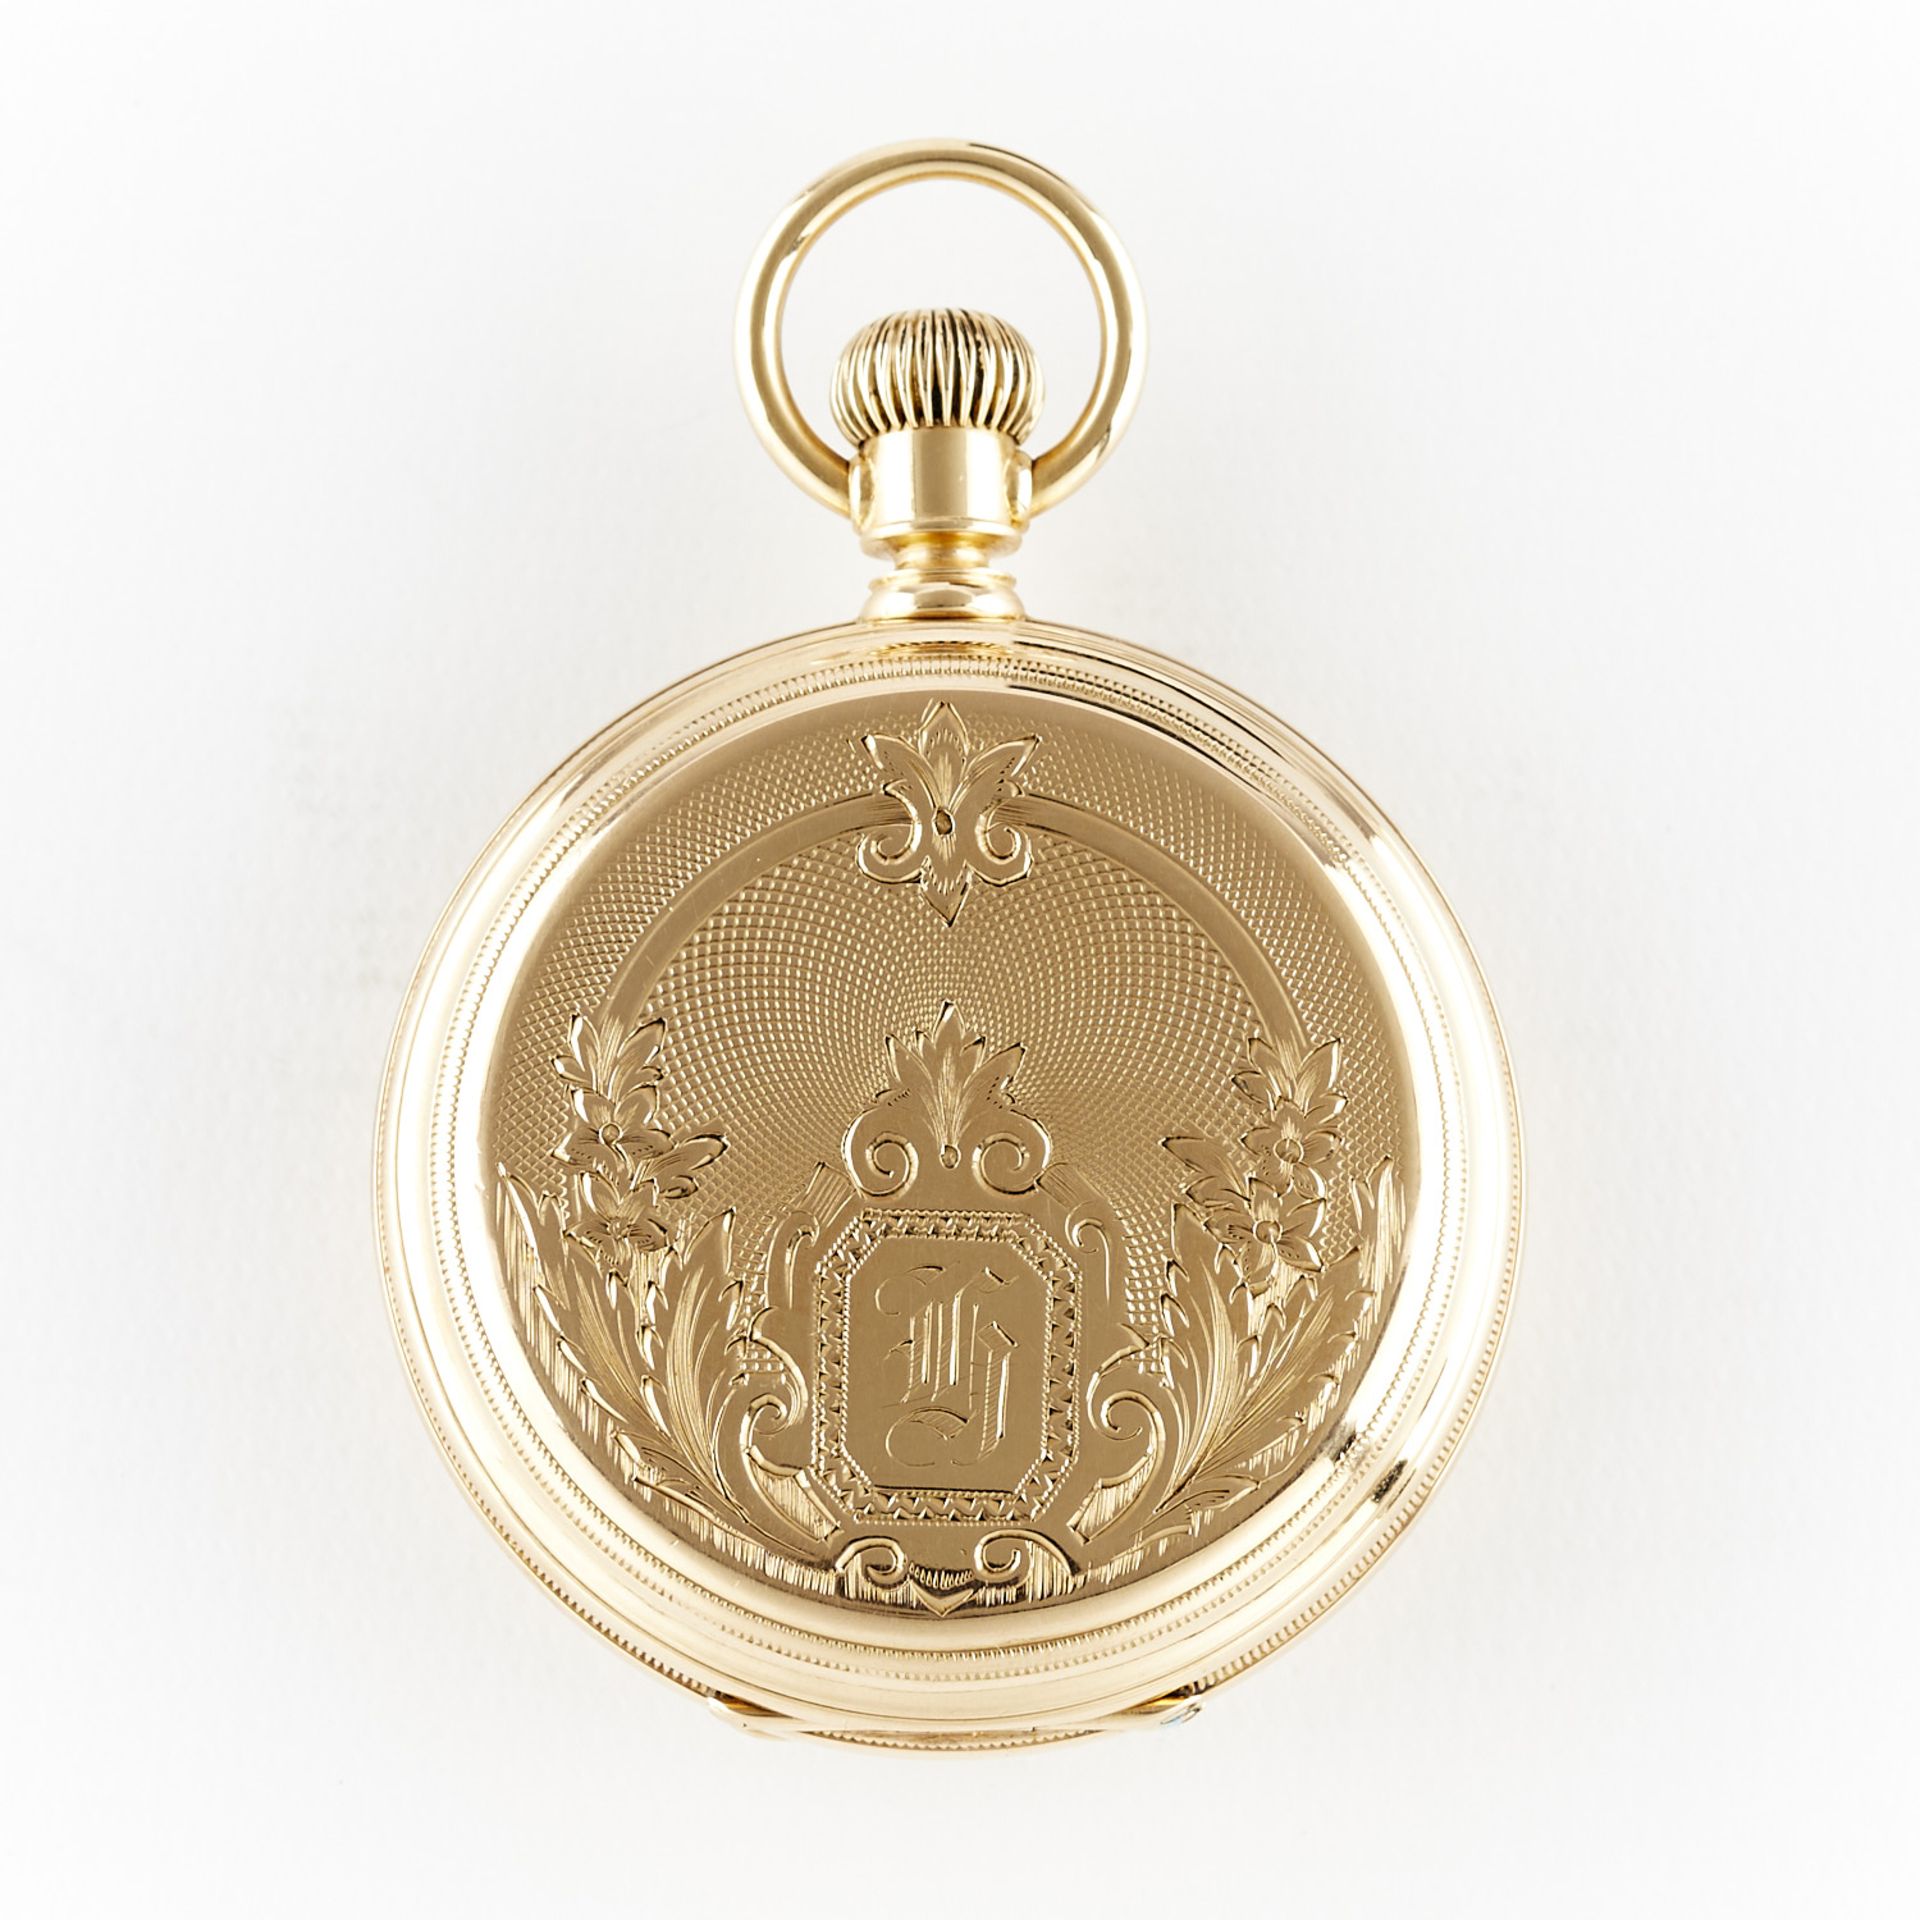 Waltham William Ellery 14k Gold Pocket Watch - Image 4 of 7